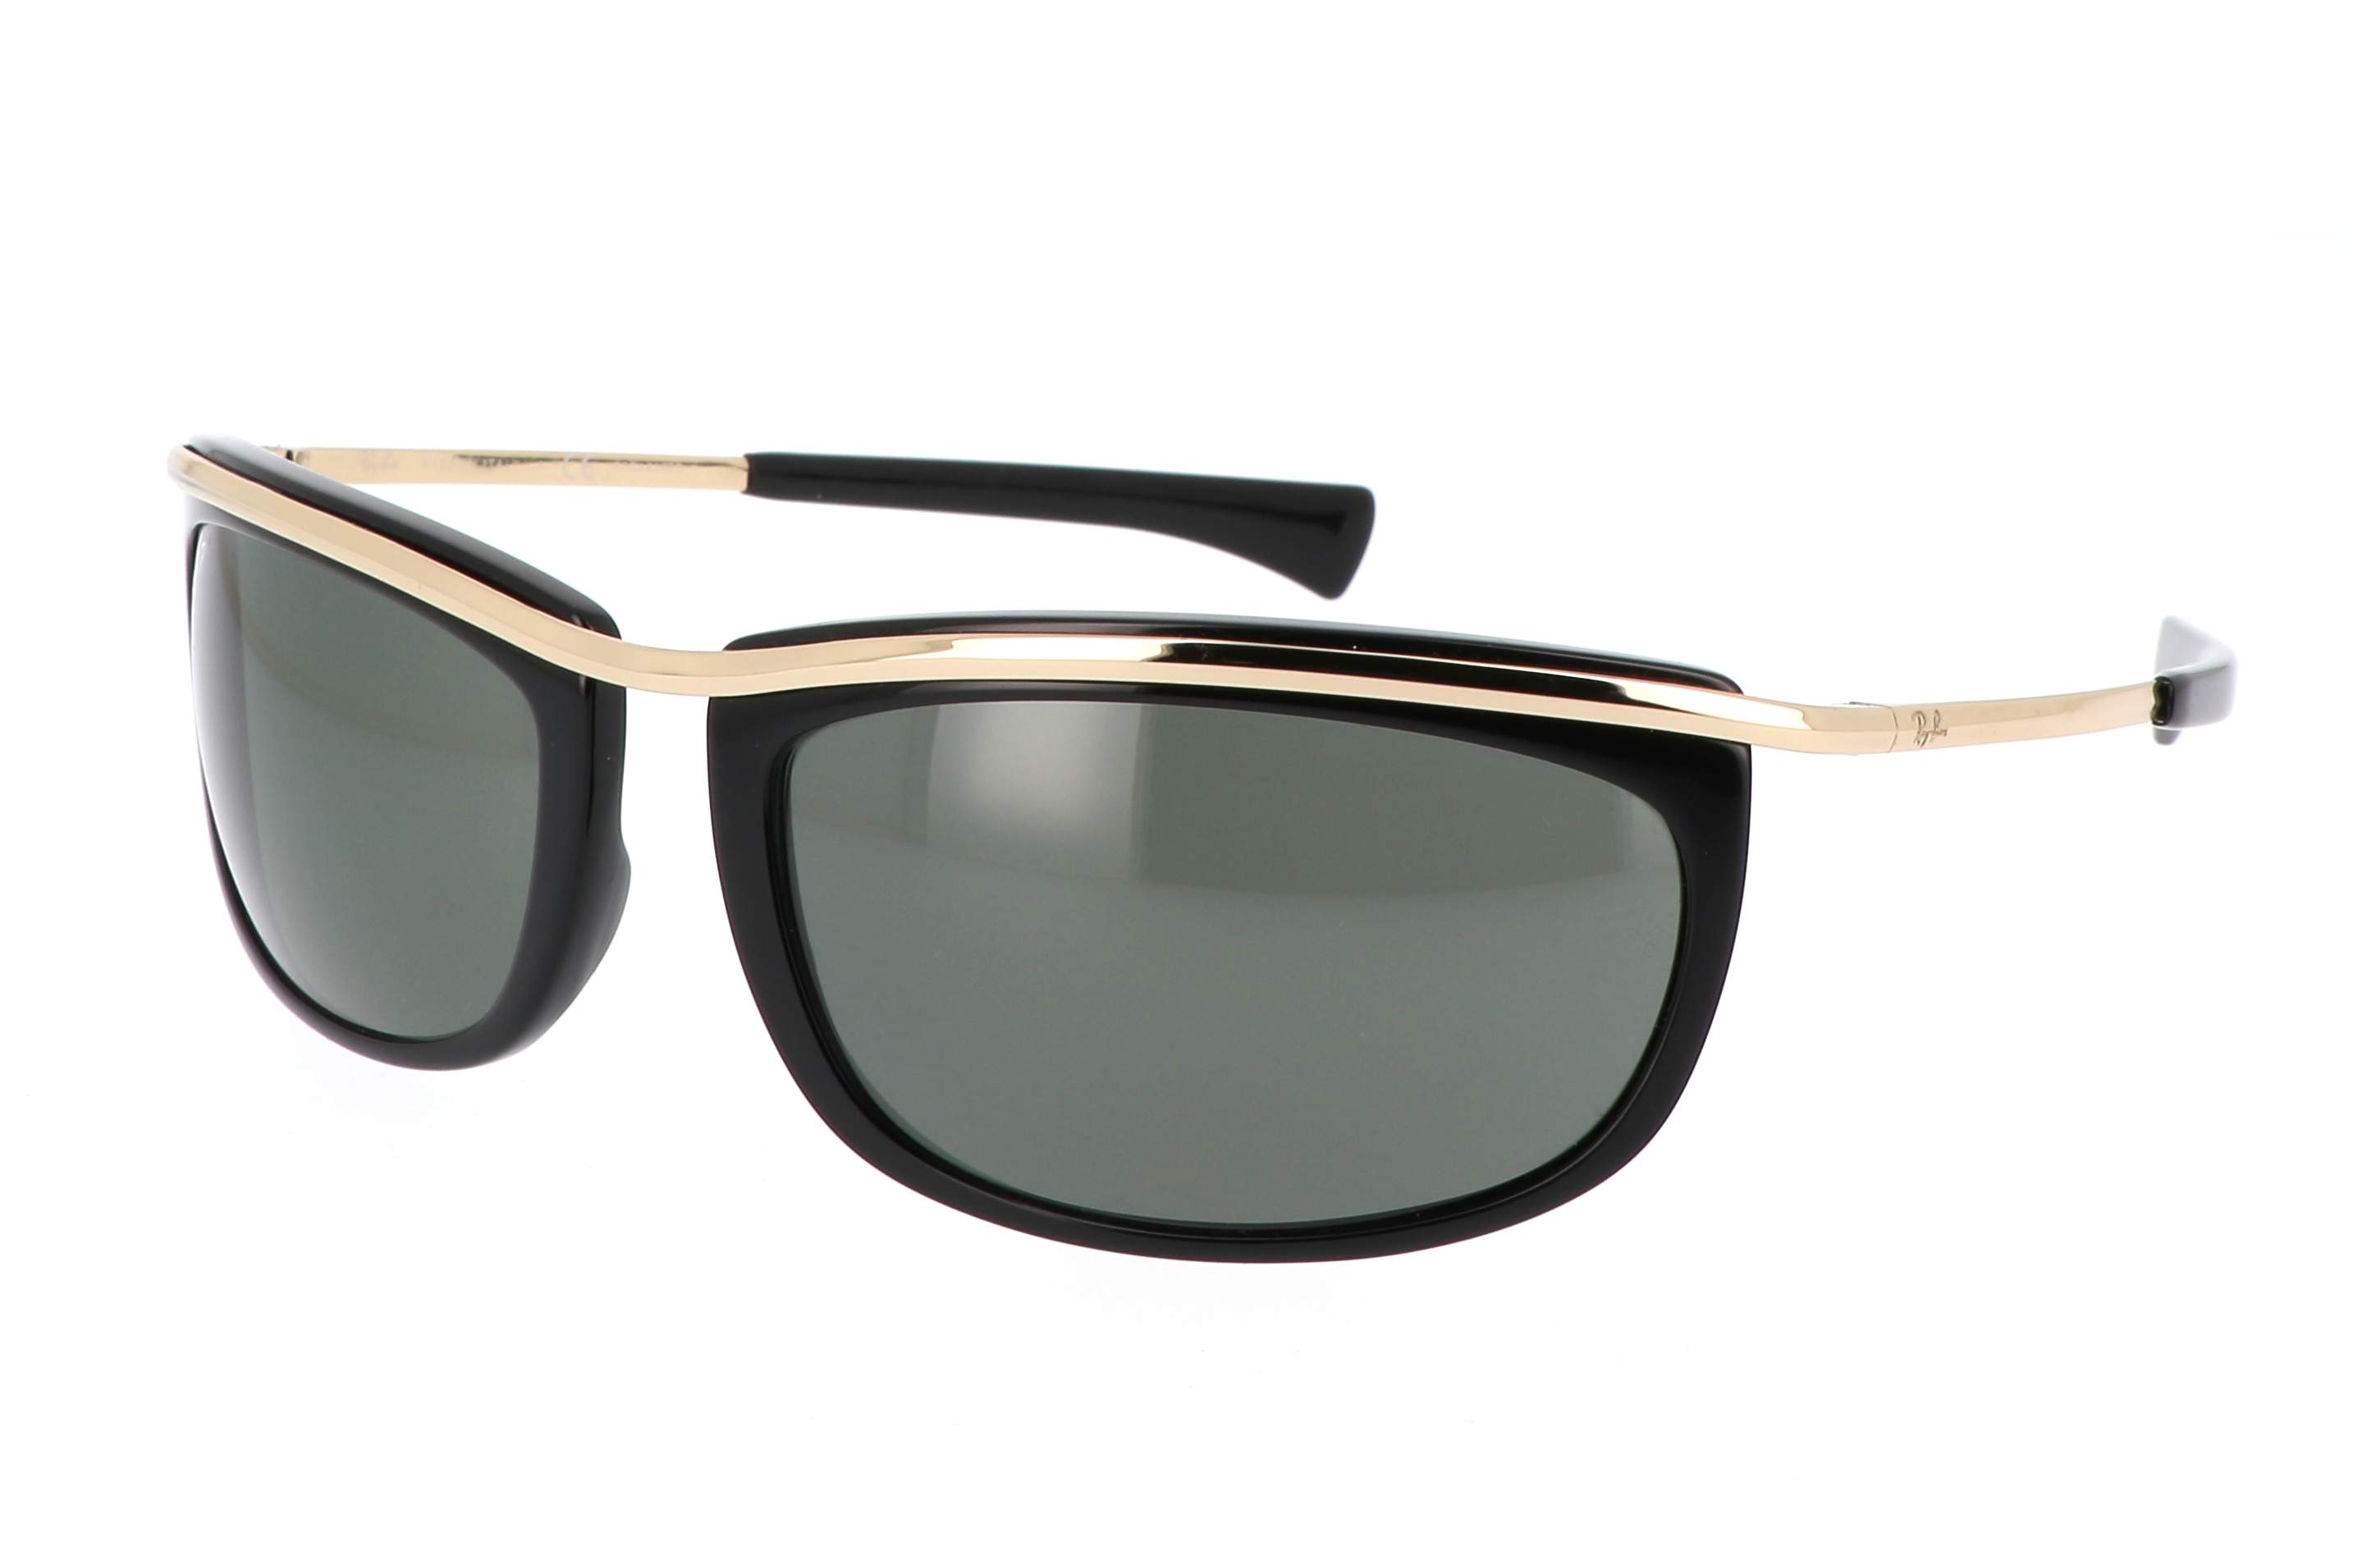 olympian style sunglasses